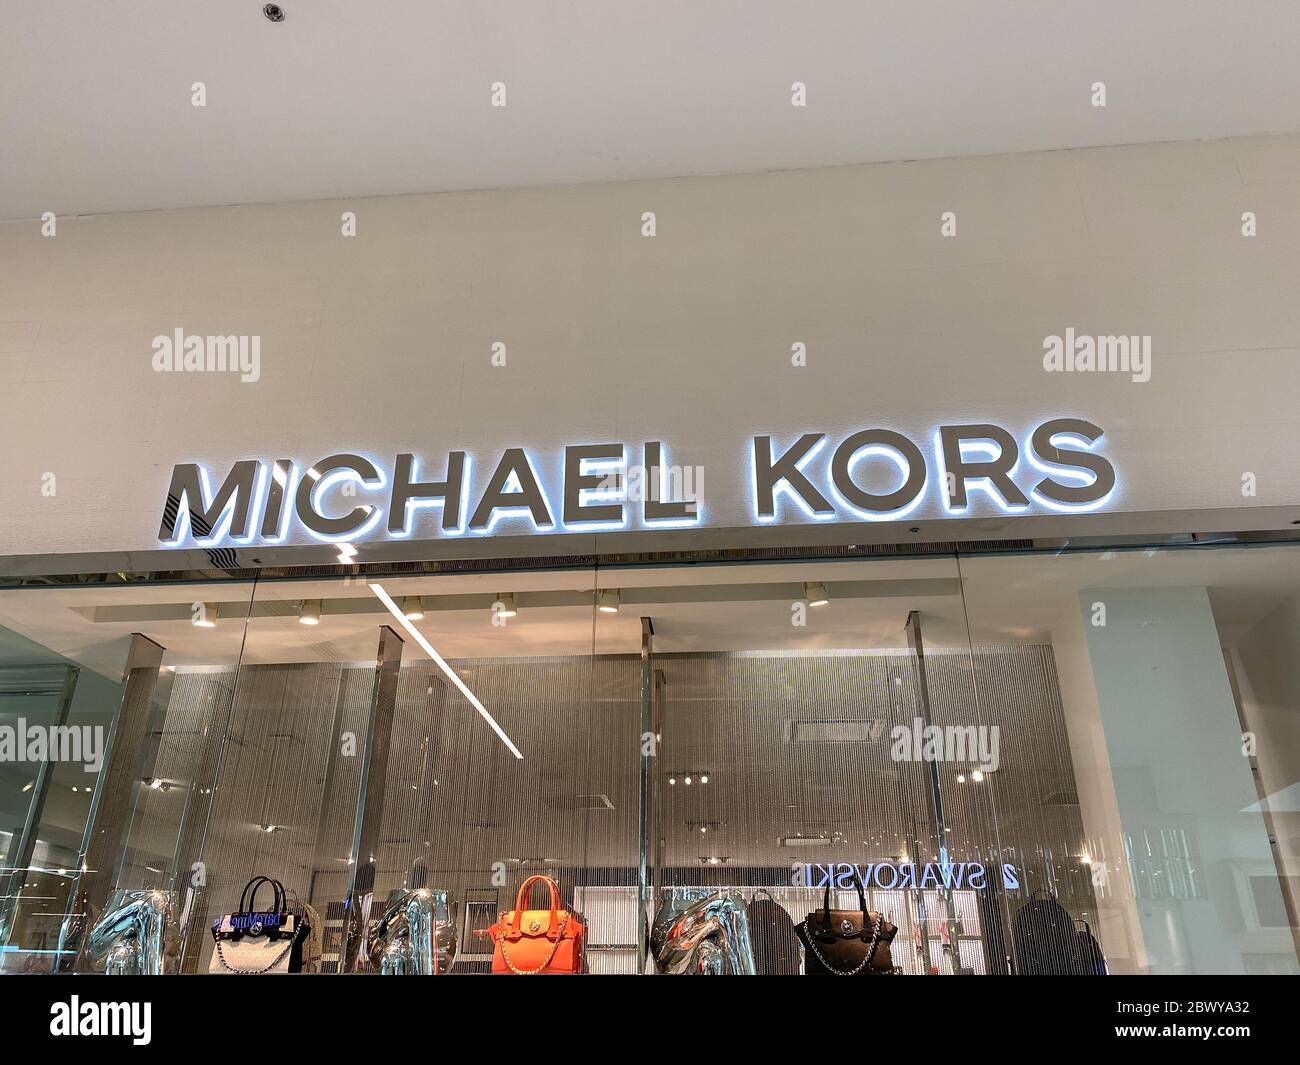 Orlando,FL/USA-2/17/20: The Michael Kors  storefront at the MIllenia Mall in Orlando, Florida. Stock Photo